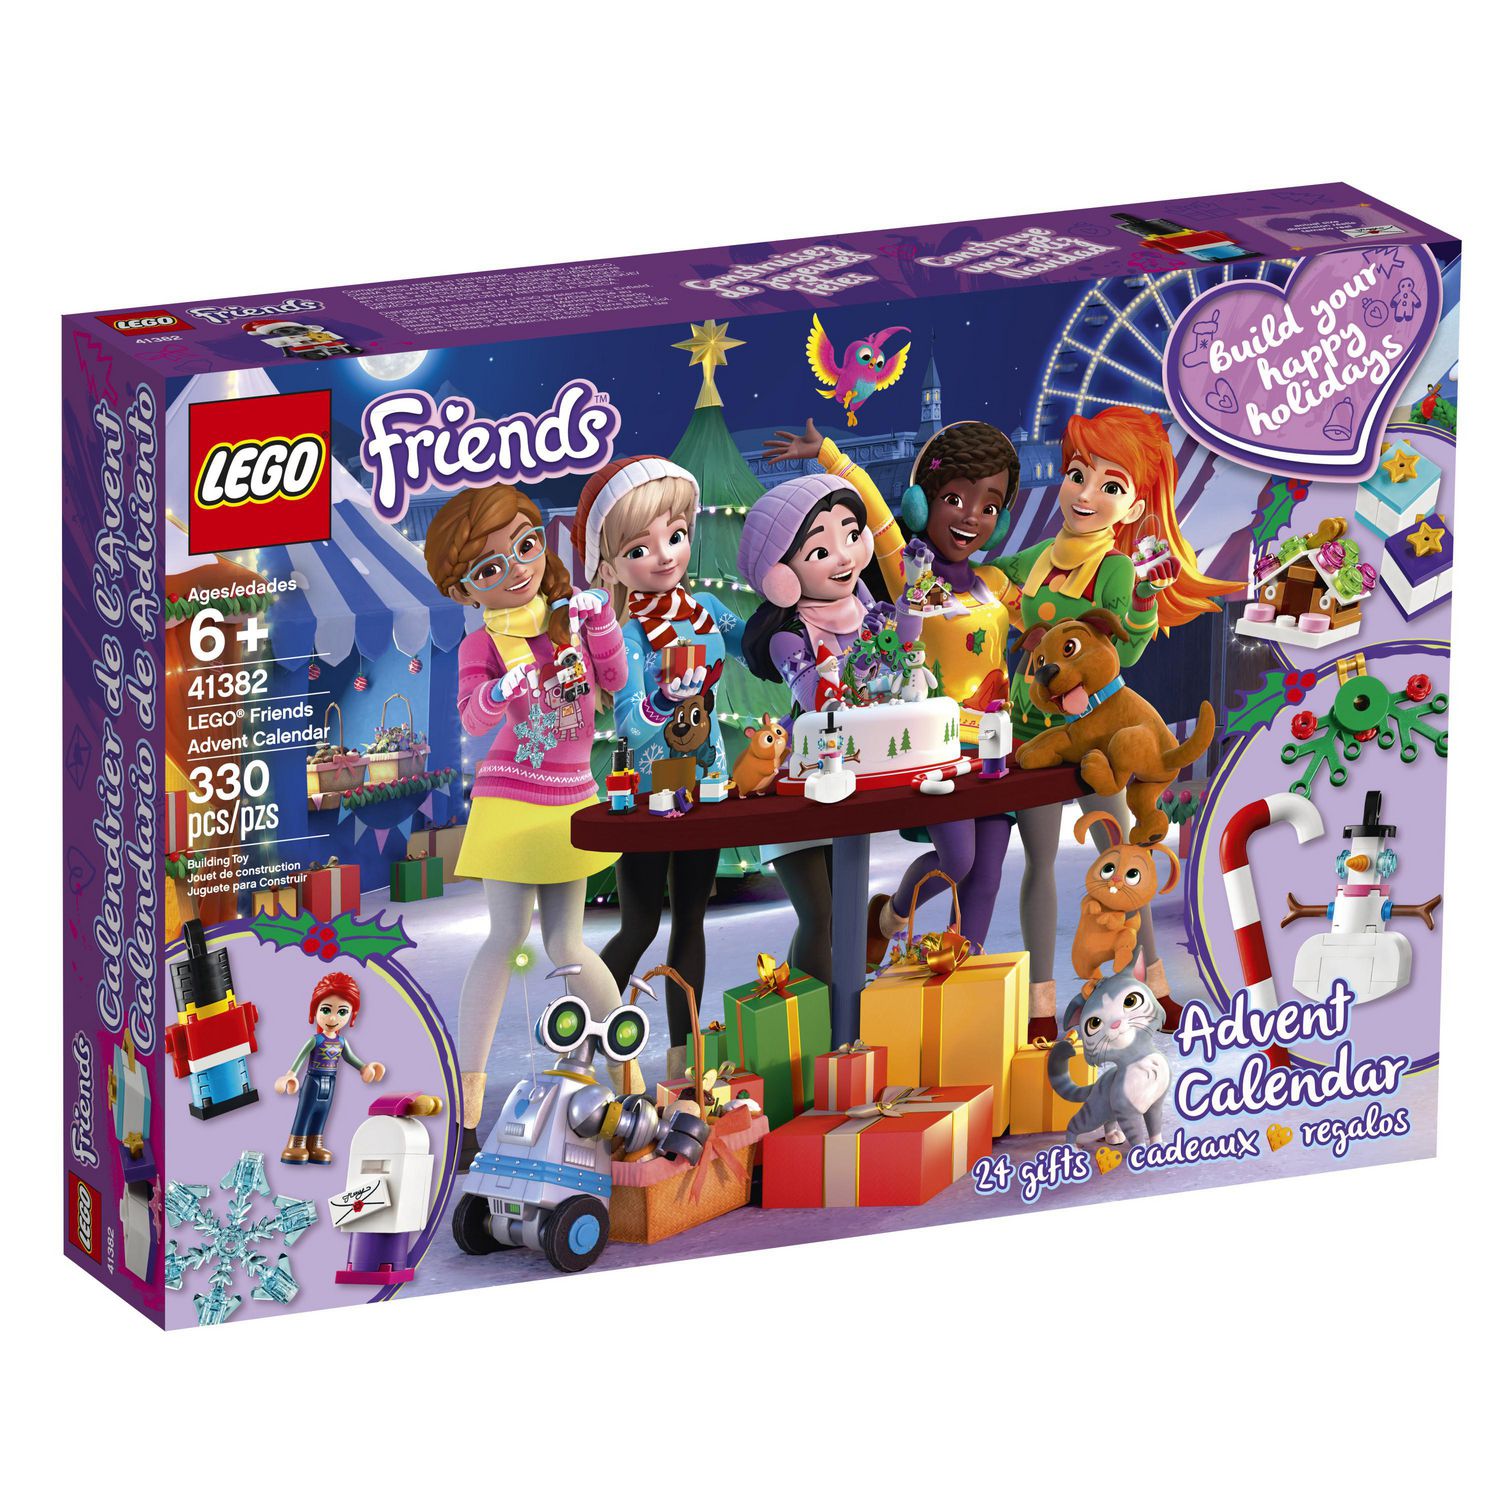 LEGO Friends Advent Calendar 41382 Toy Building Kit (330 Piece)